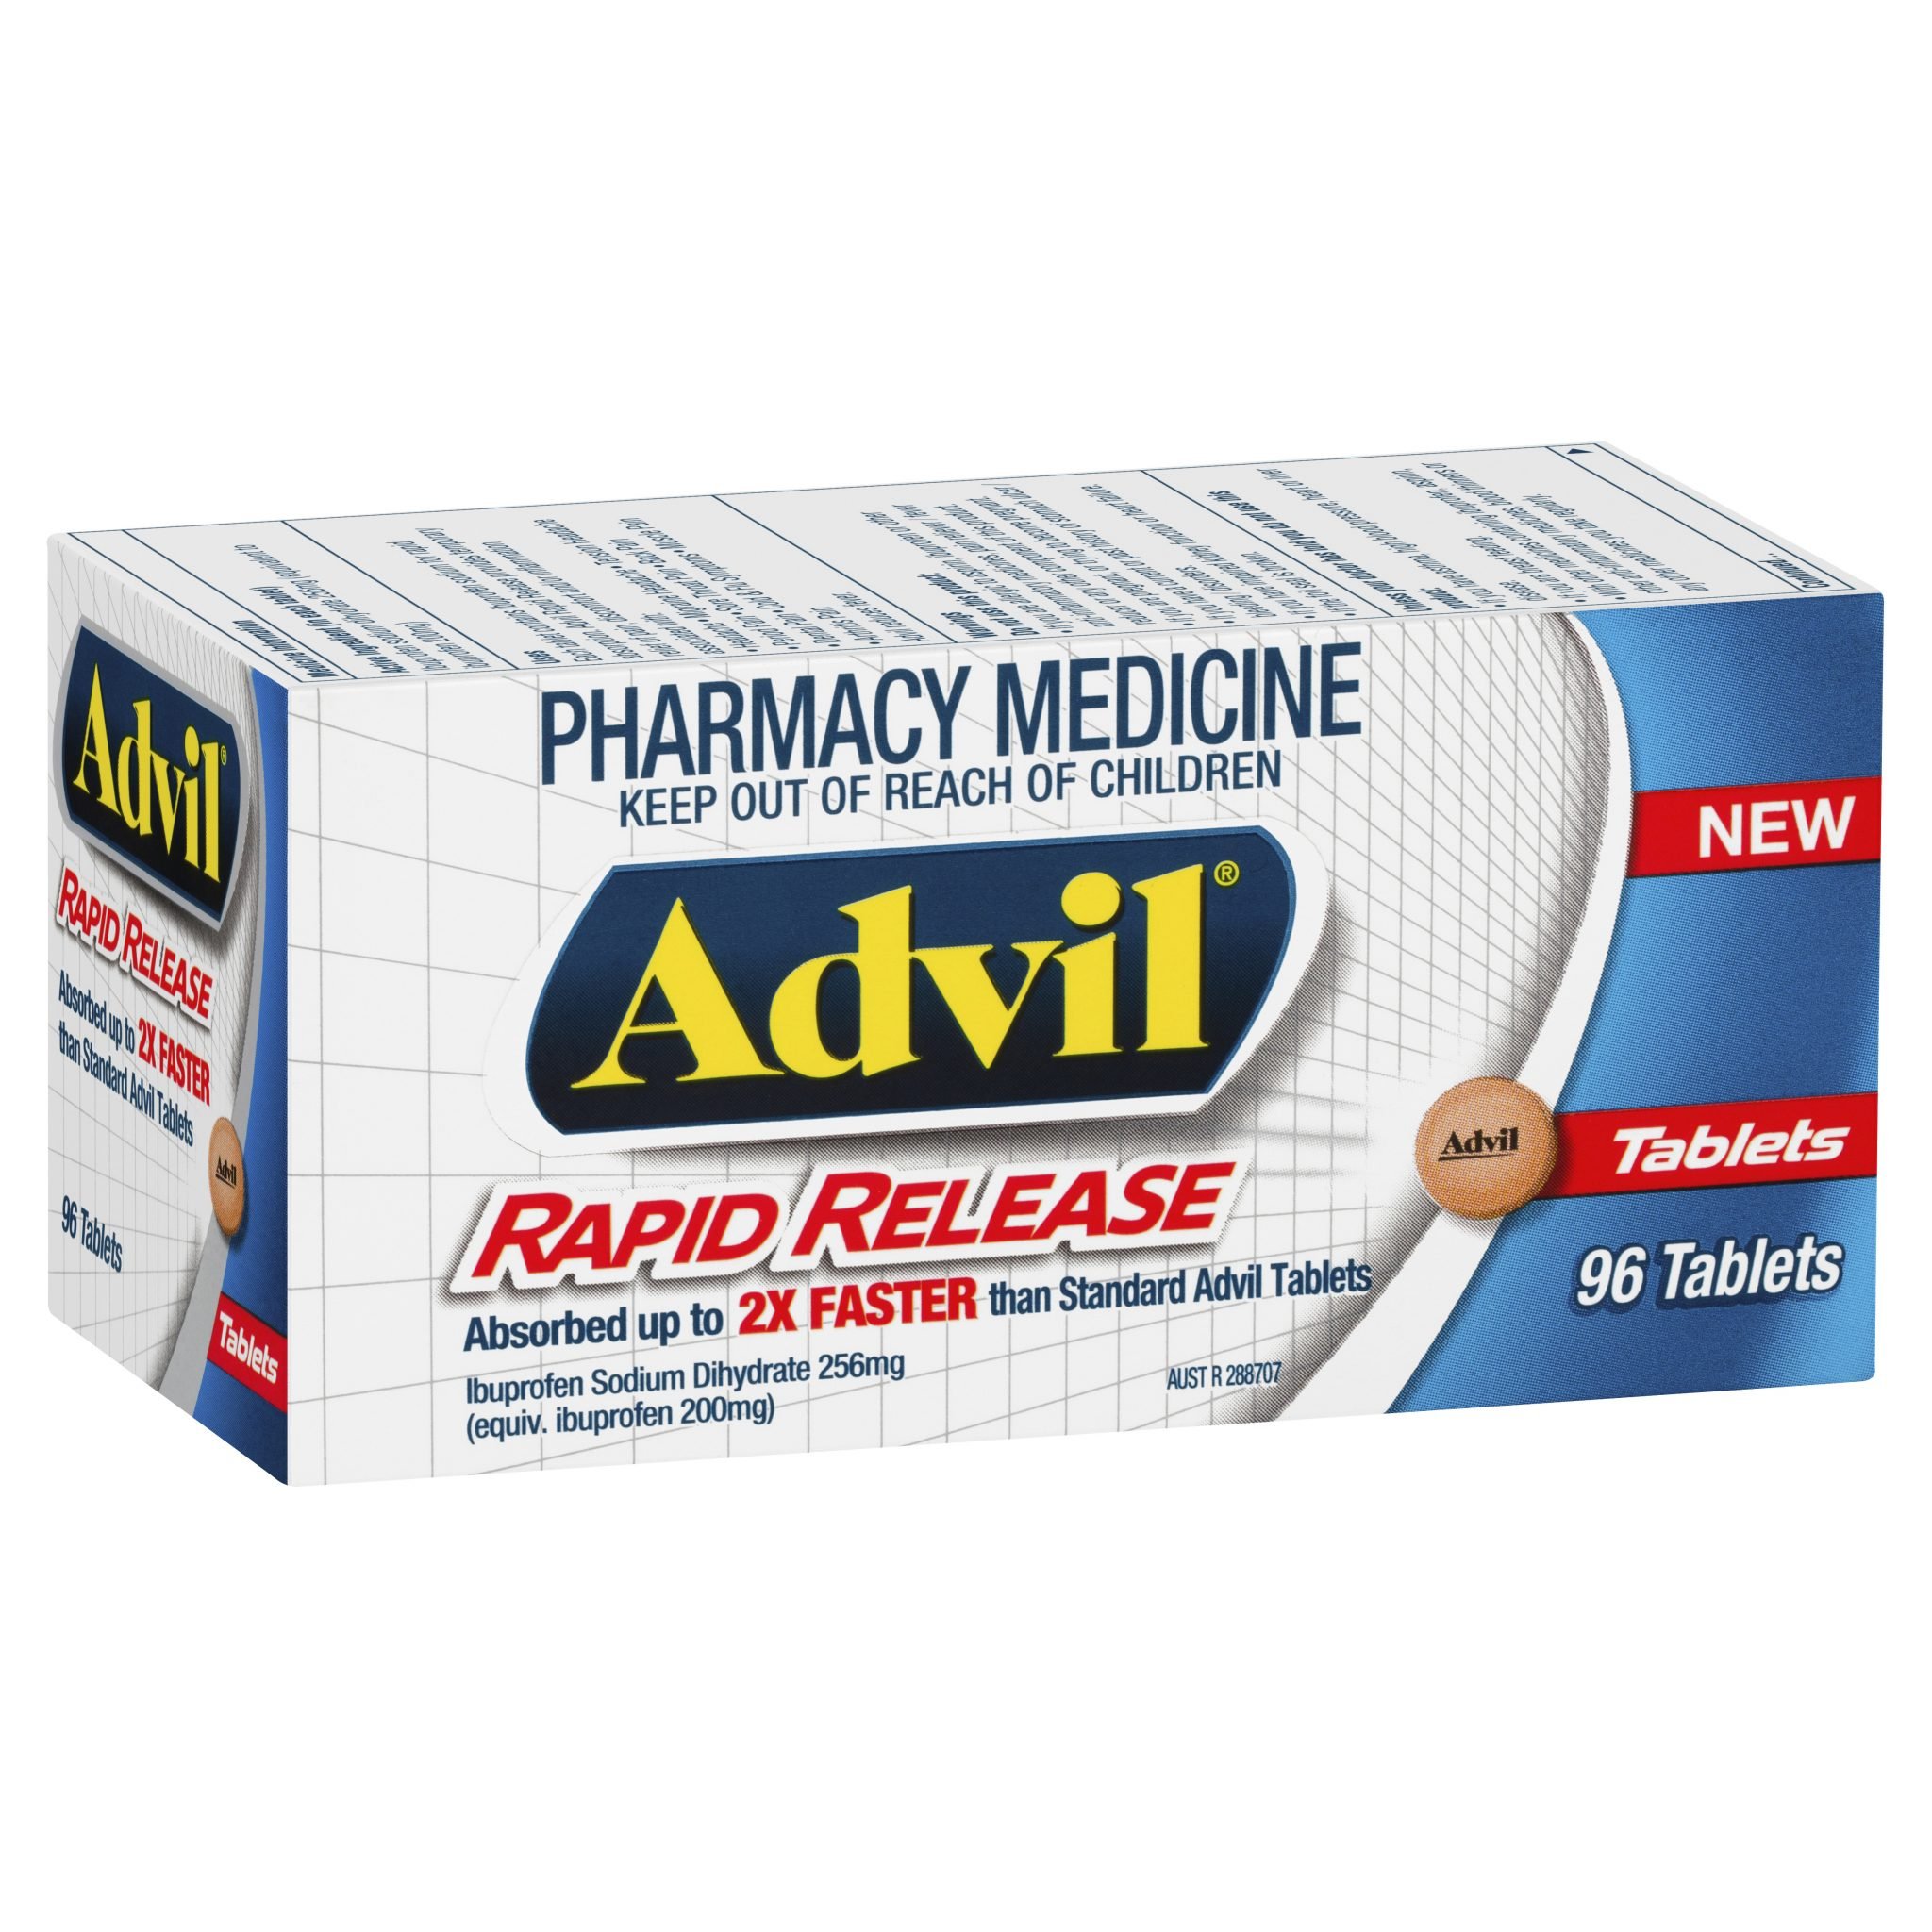 Advil Ibuprofen 200mg Rapid Release Tablets (Pack of 96)